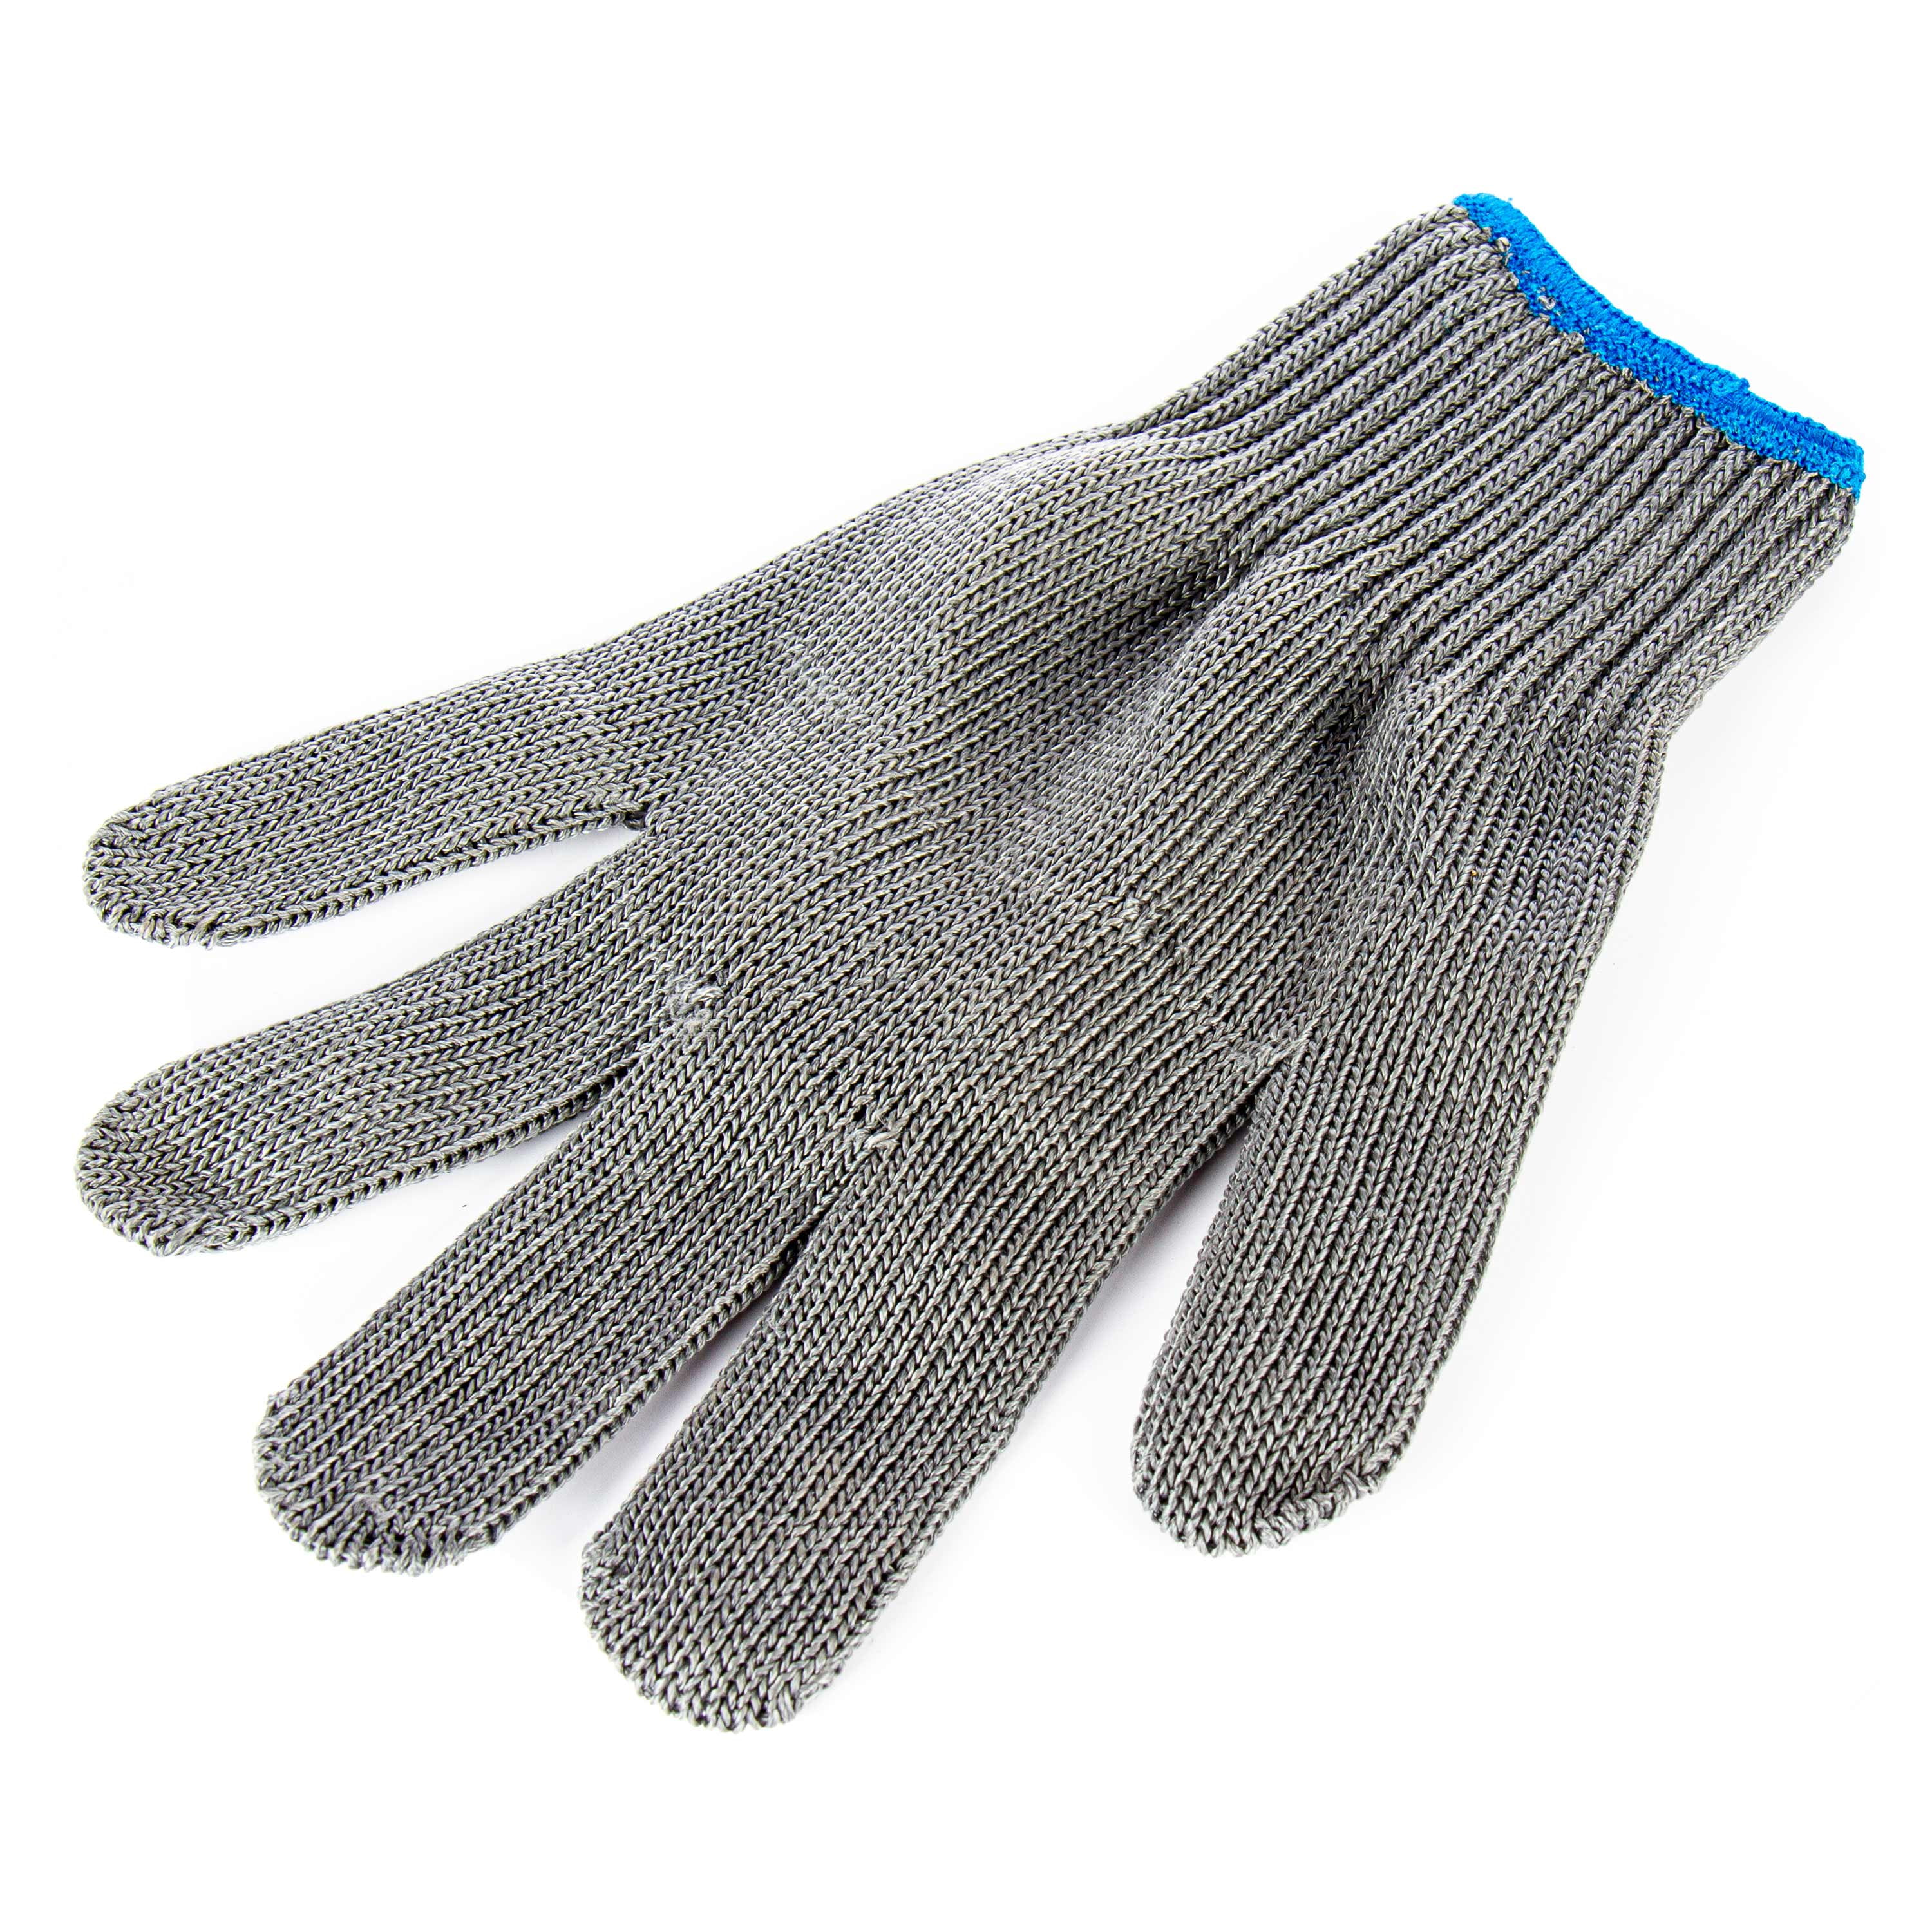 Ozark Trail Fishing Fillet Glove - Gray Glove Adult Unisex sized. 